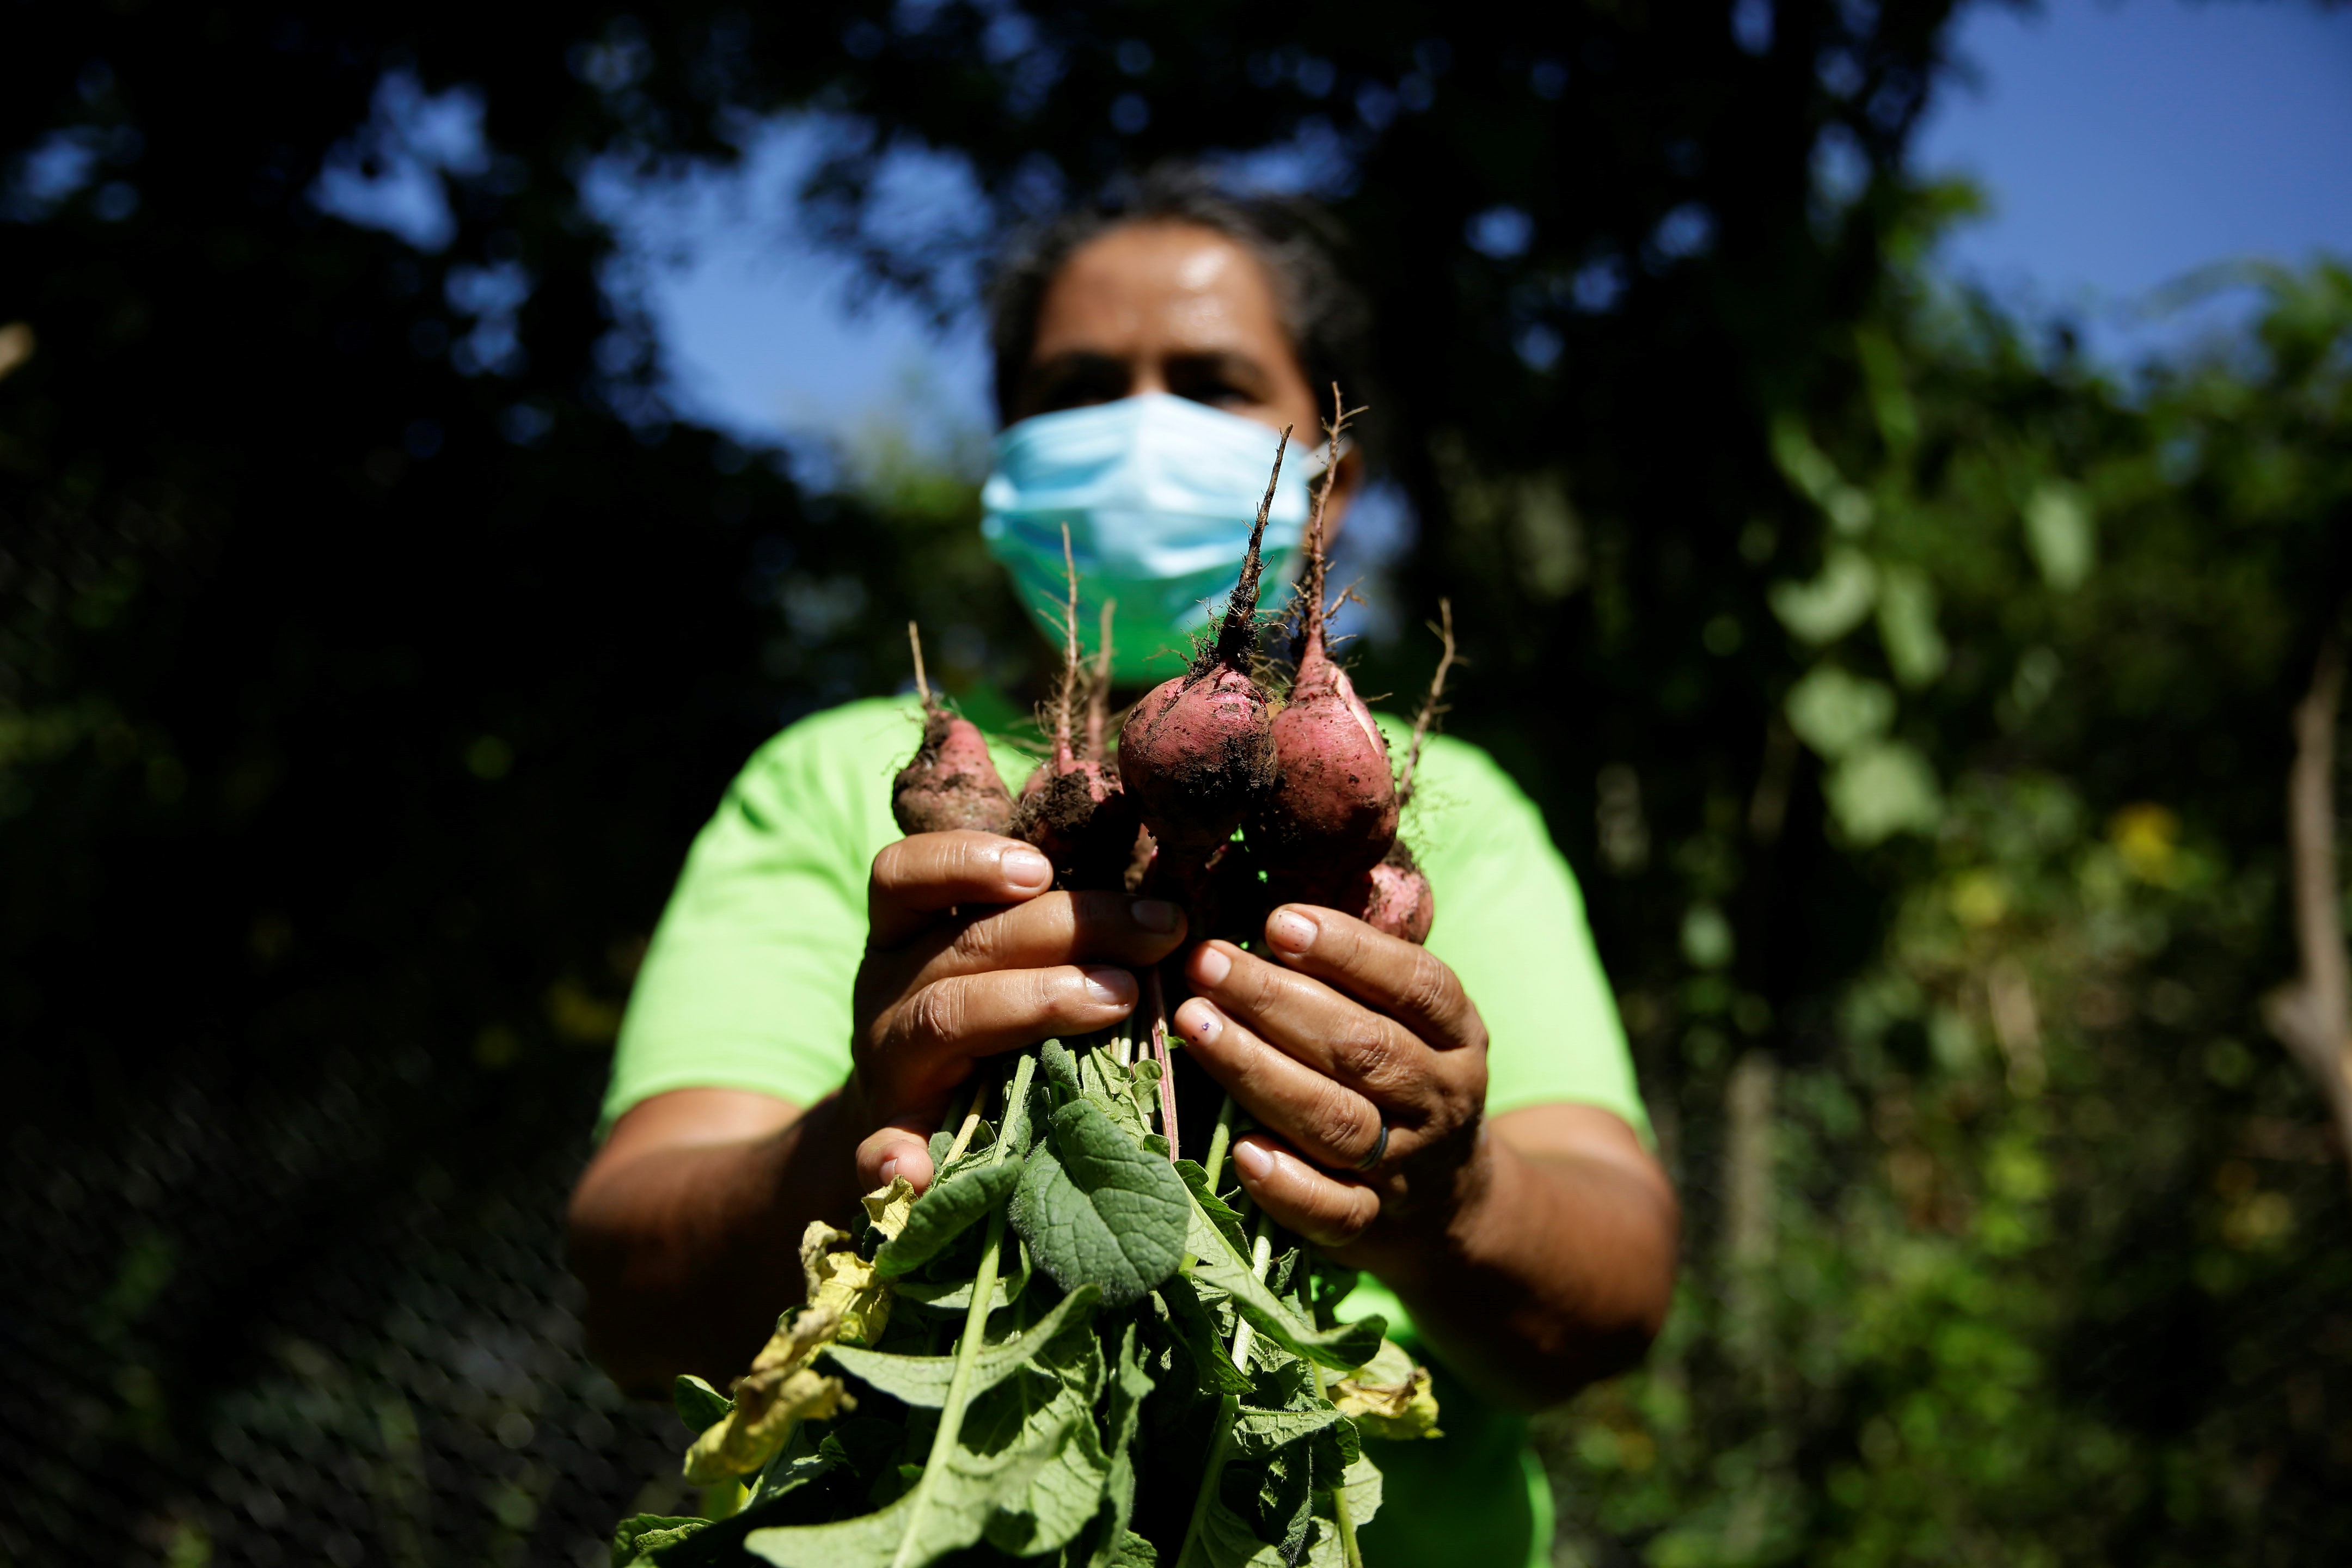  Reina Isabel Lopez cuts her radish crop, in Jujutla, El Salvador 17 September 2020 